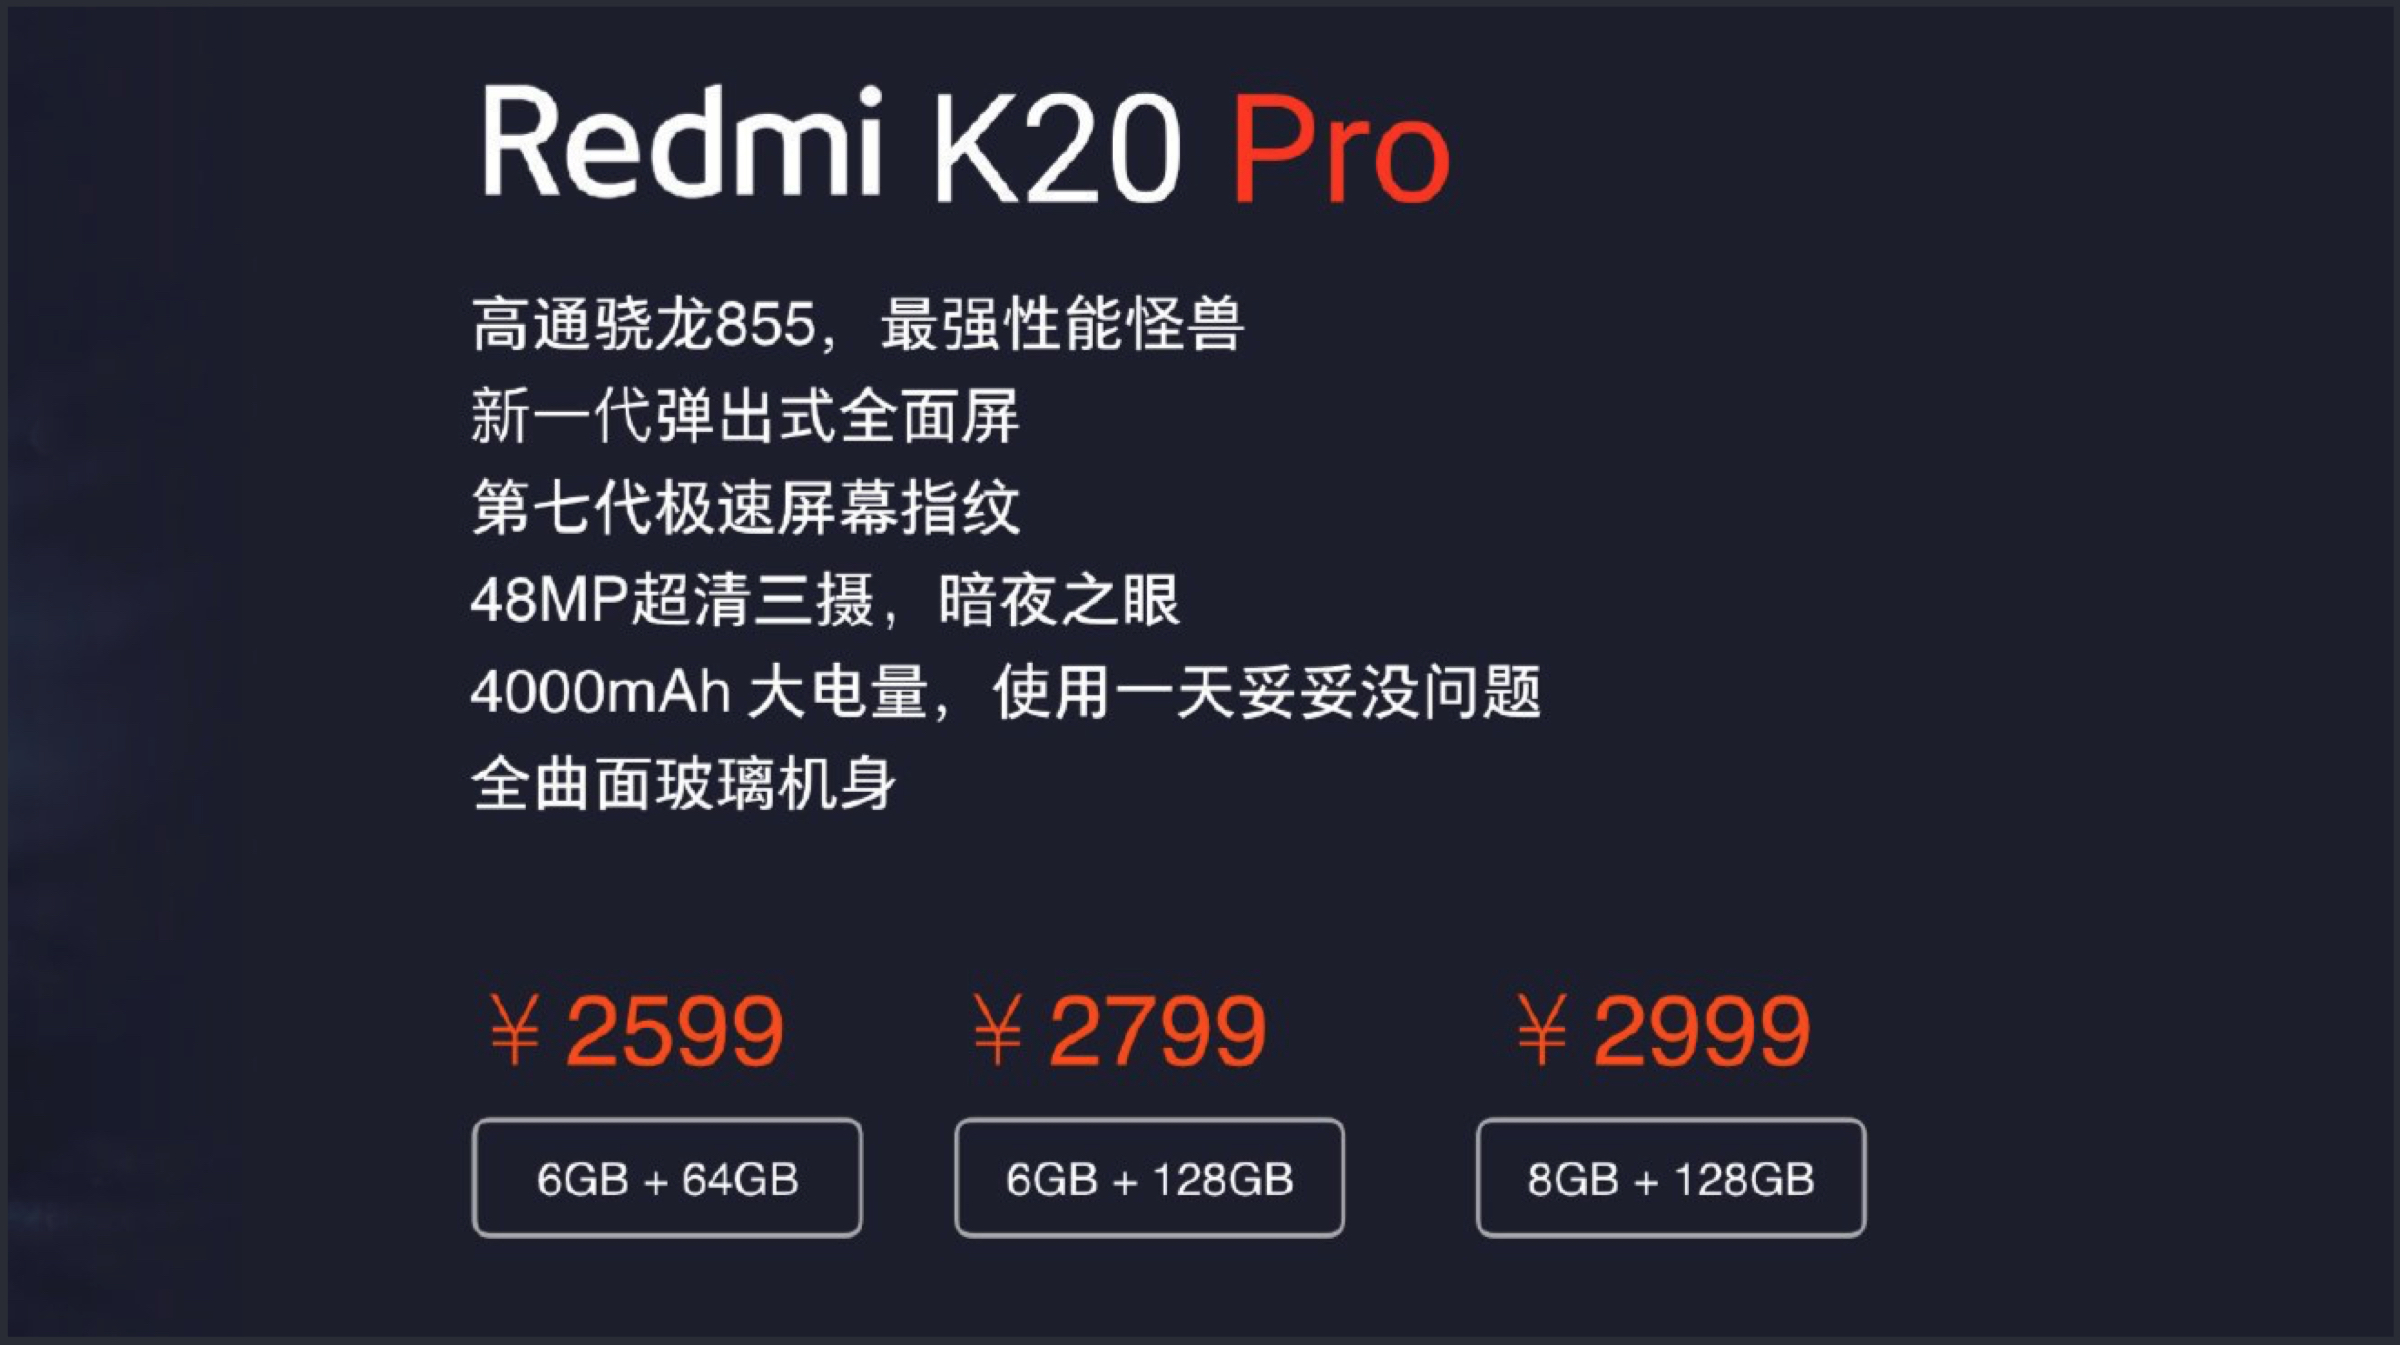 Redmi K20 Pro Price